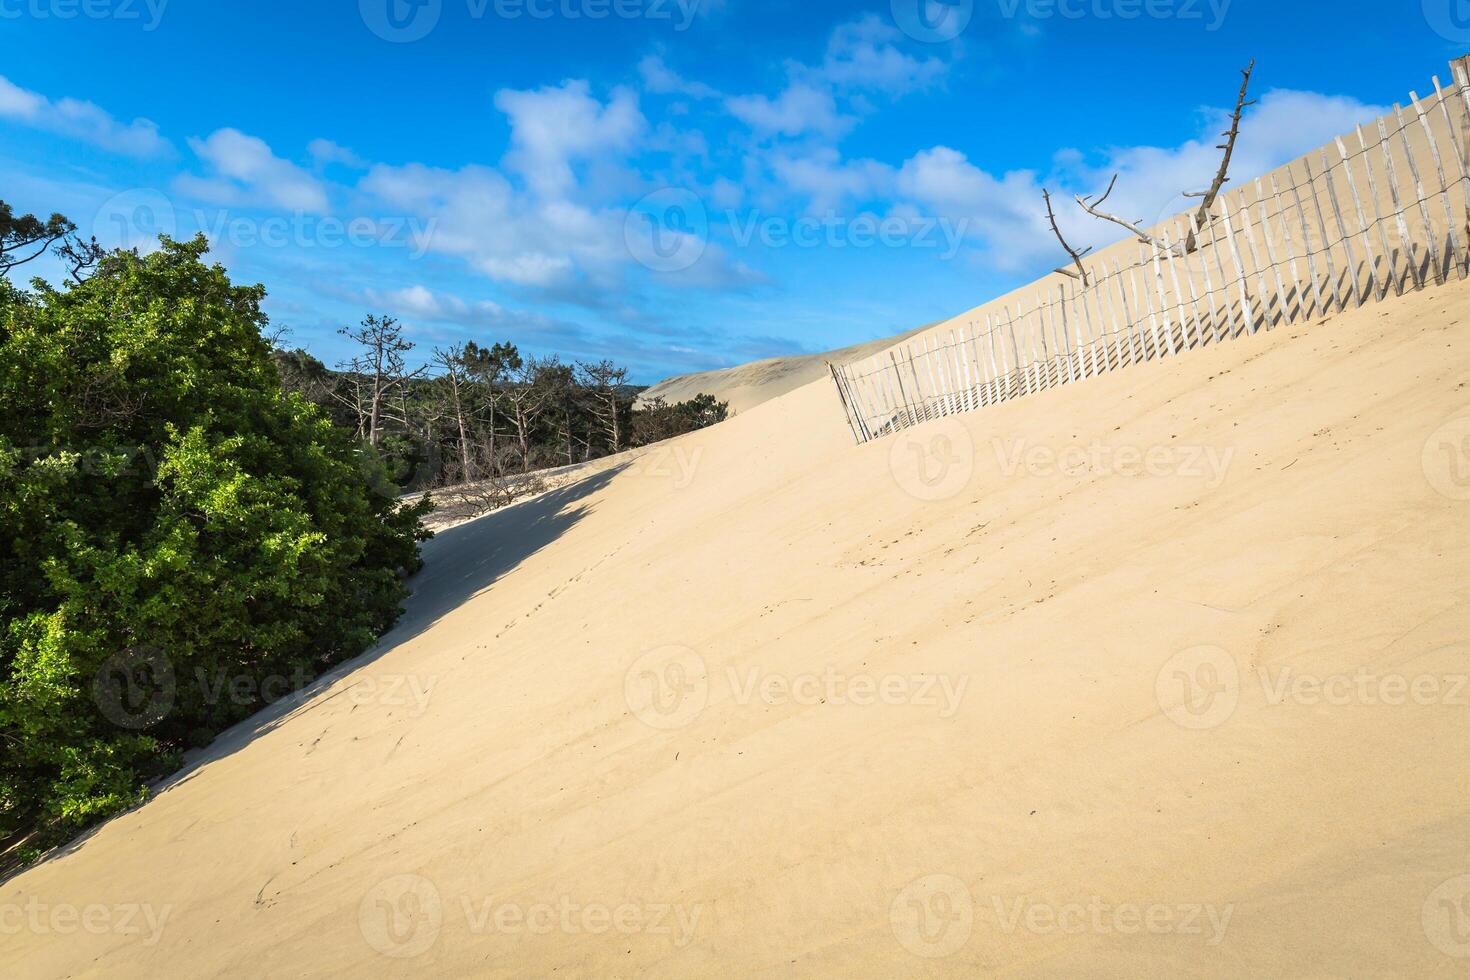 Super goed duin van pyla, de hoogste zand duin in Europa, arcachon baai, Frankrijk foto